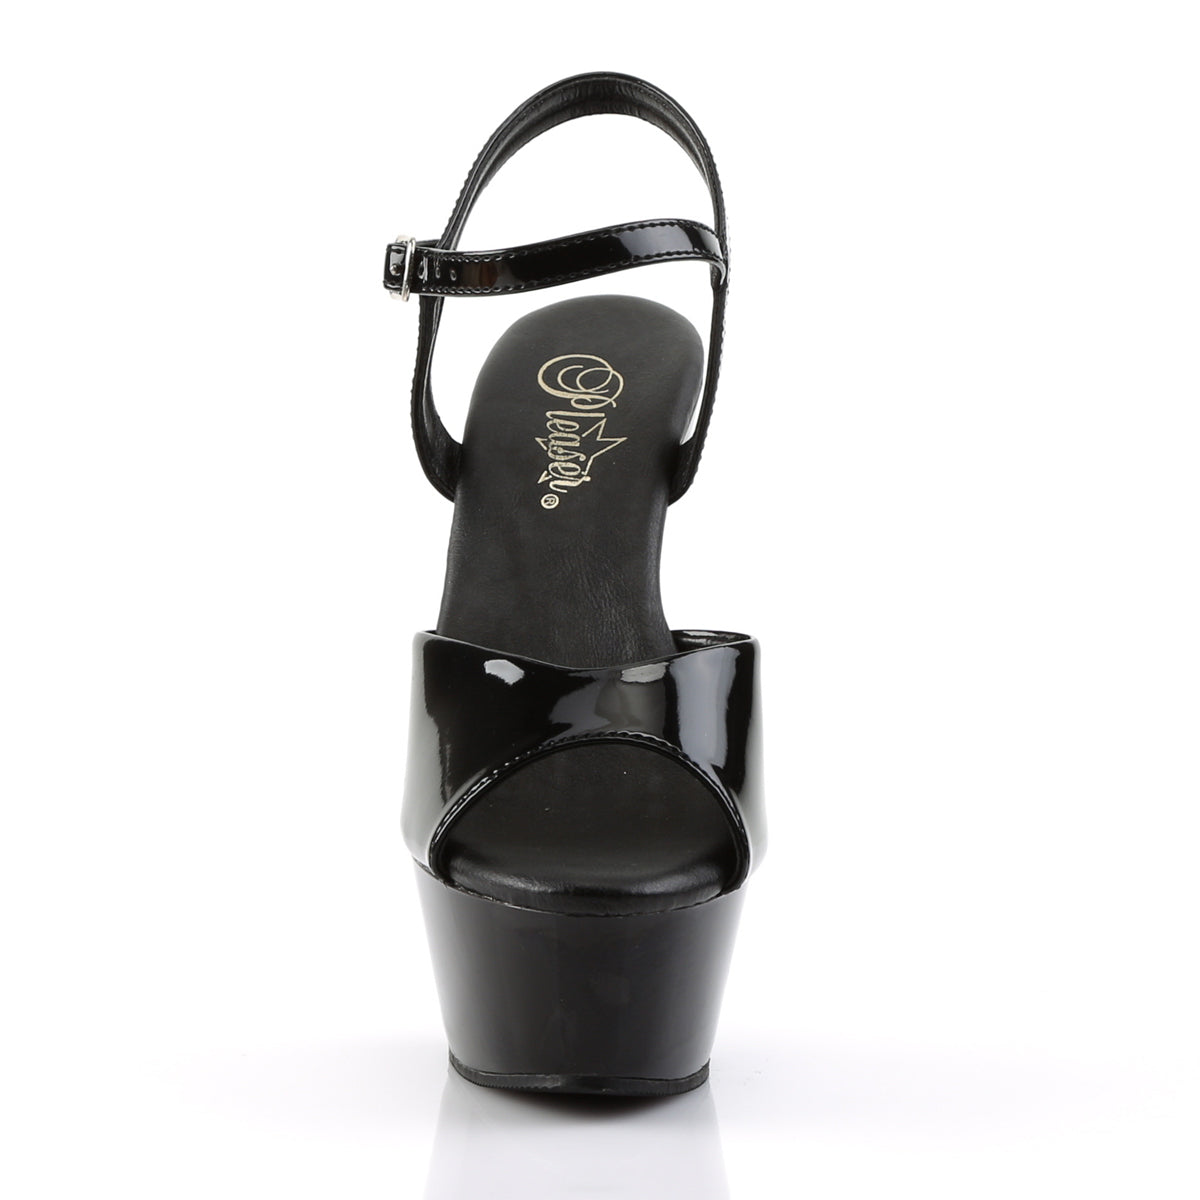 KISS-209VL Black Patent Platform Sandal Pleaser